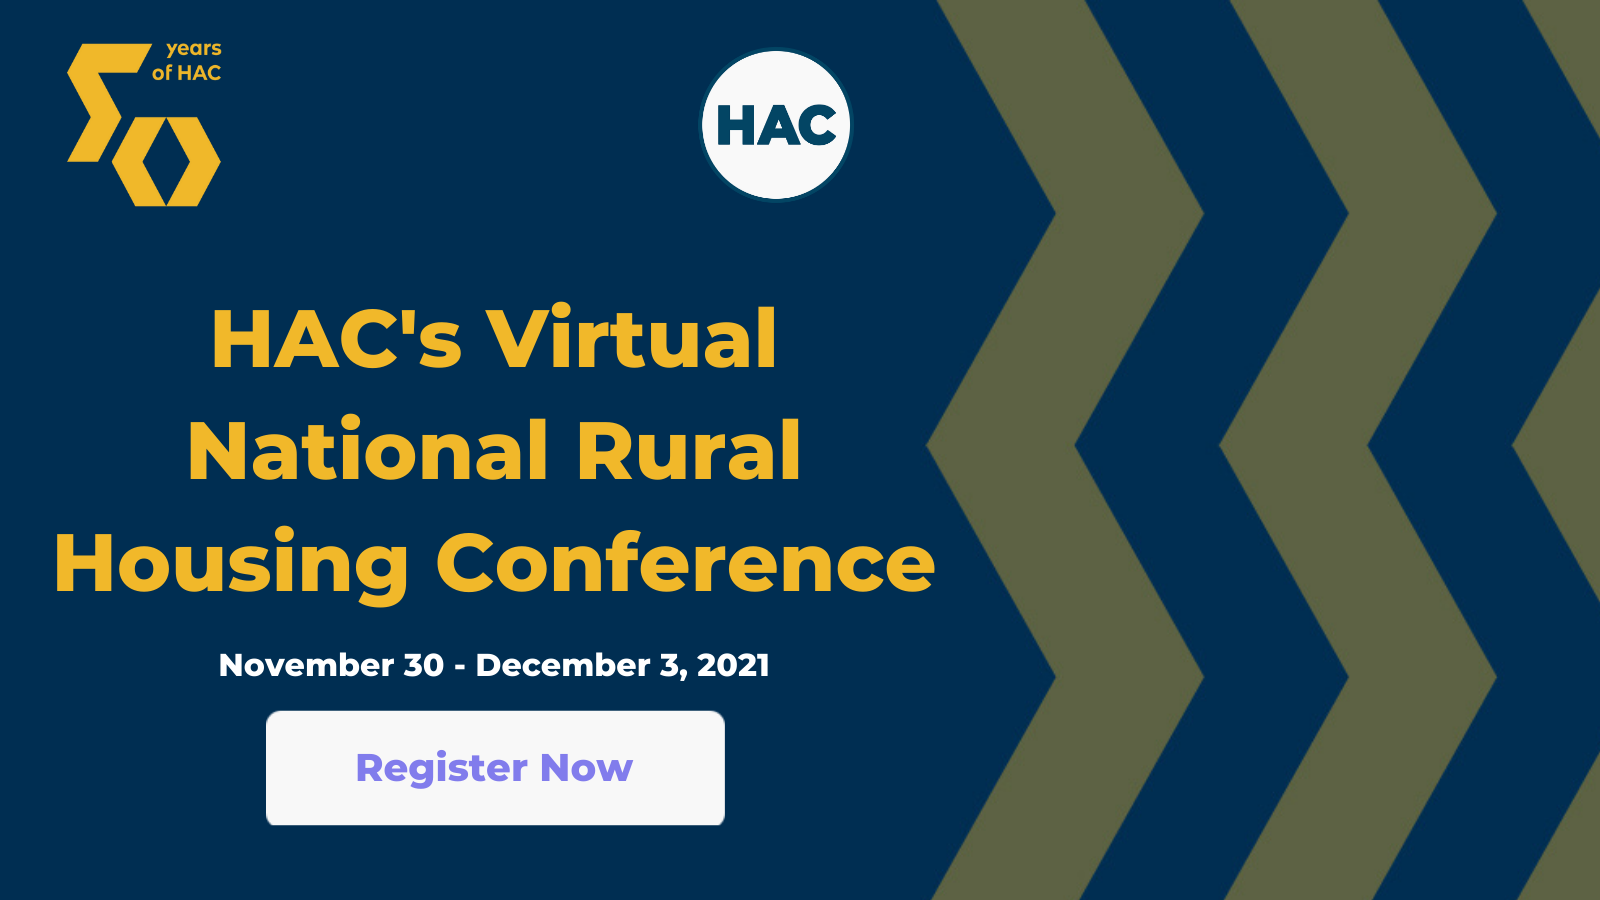 Keynote Speakers Announced for HAC's Virtual National Rural Housing